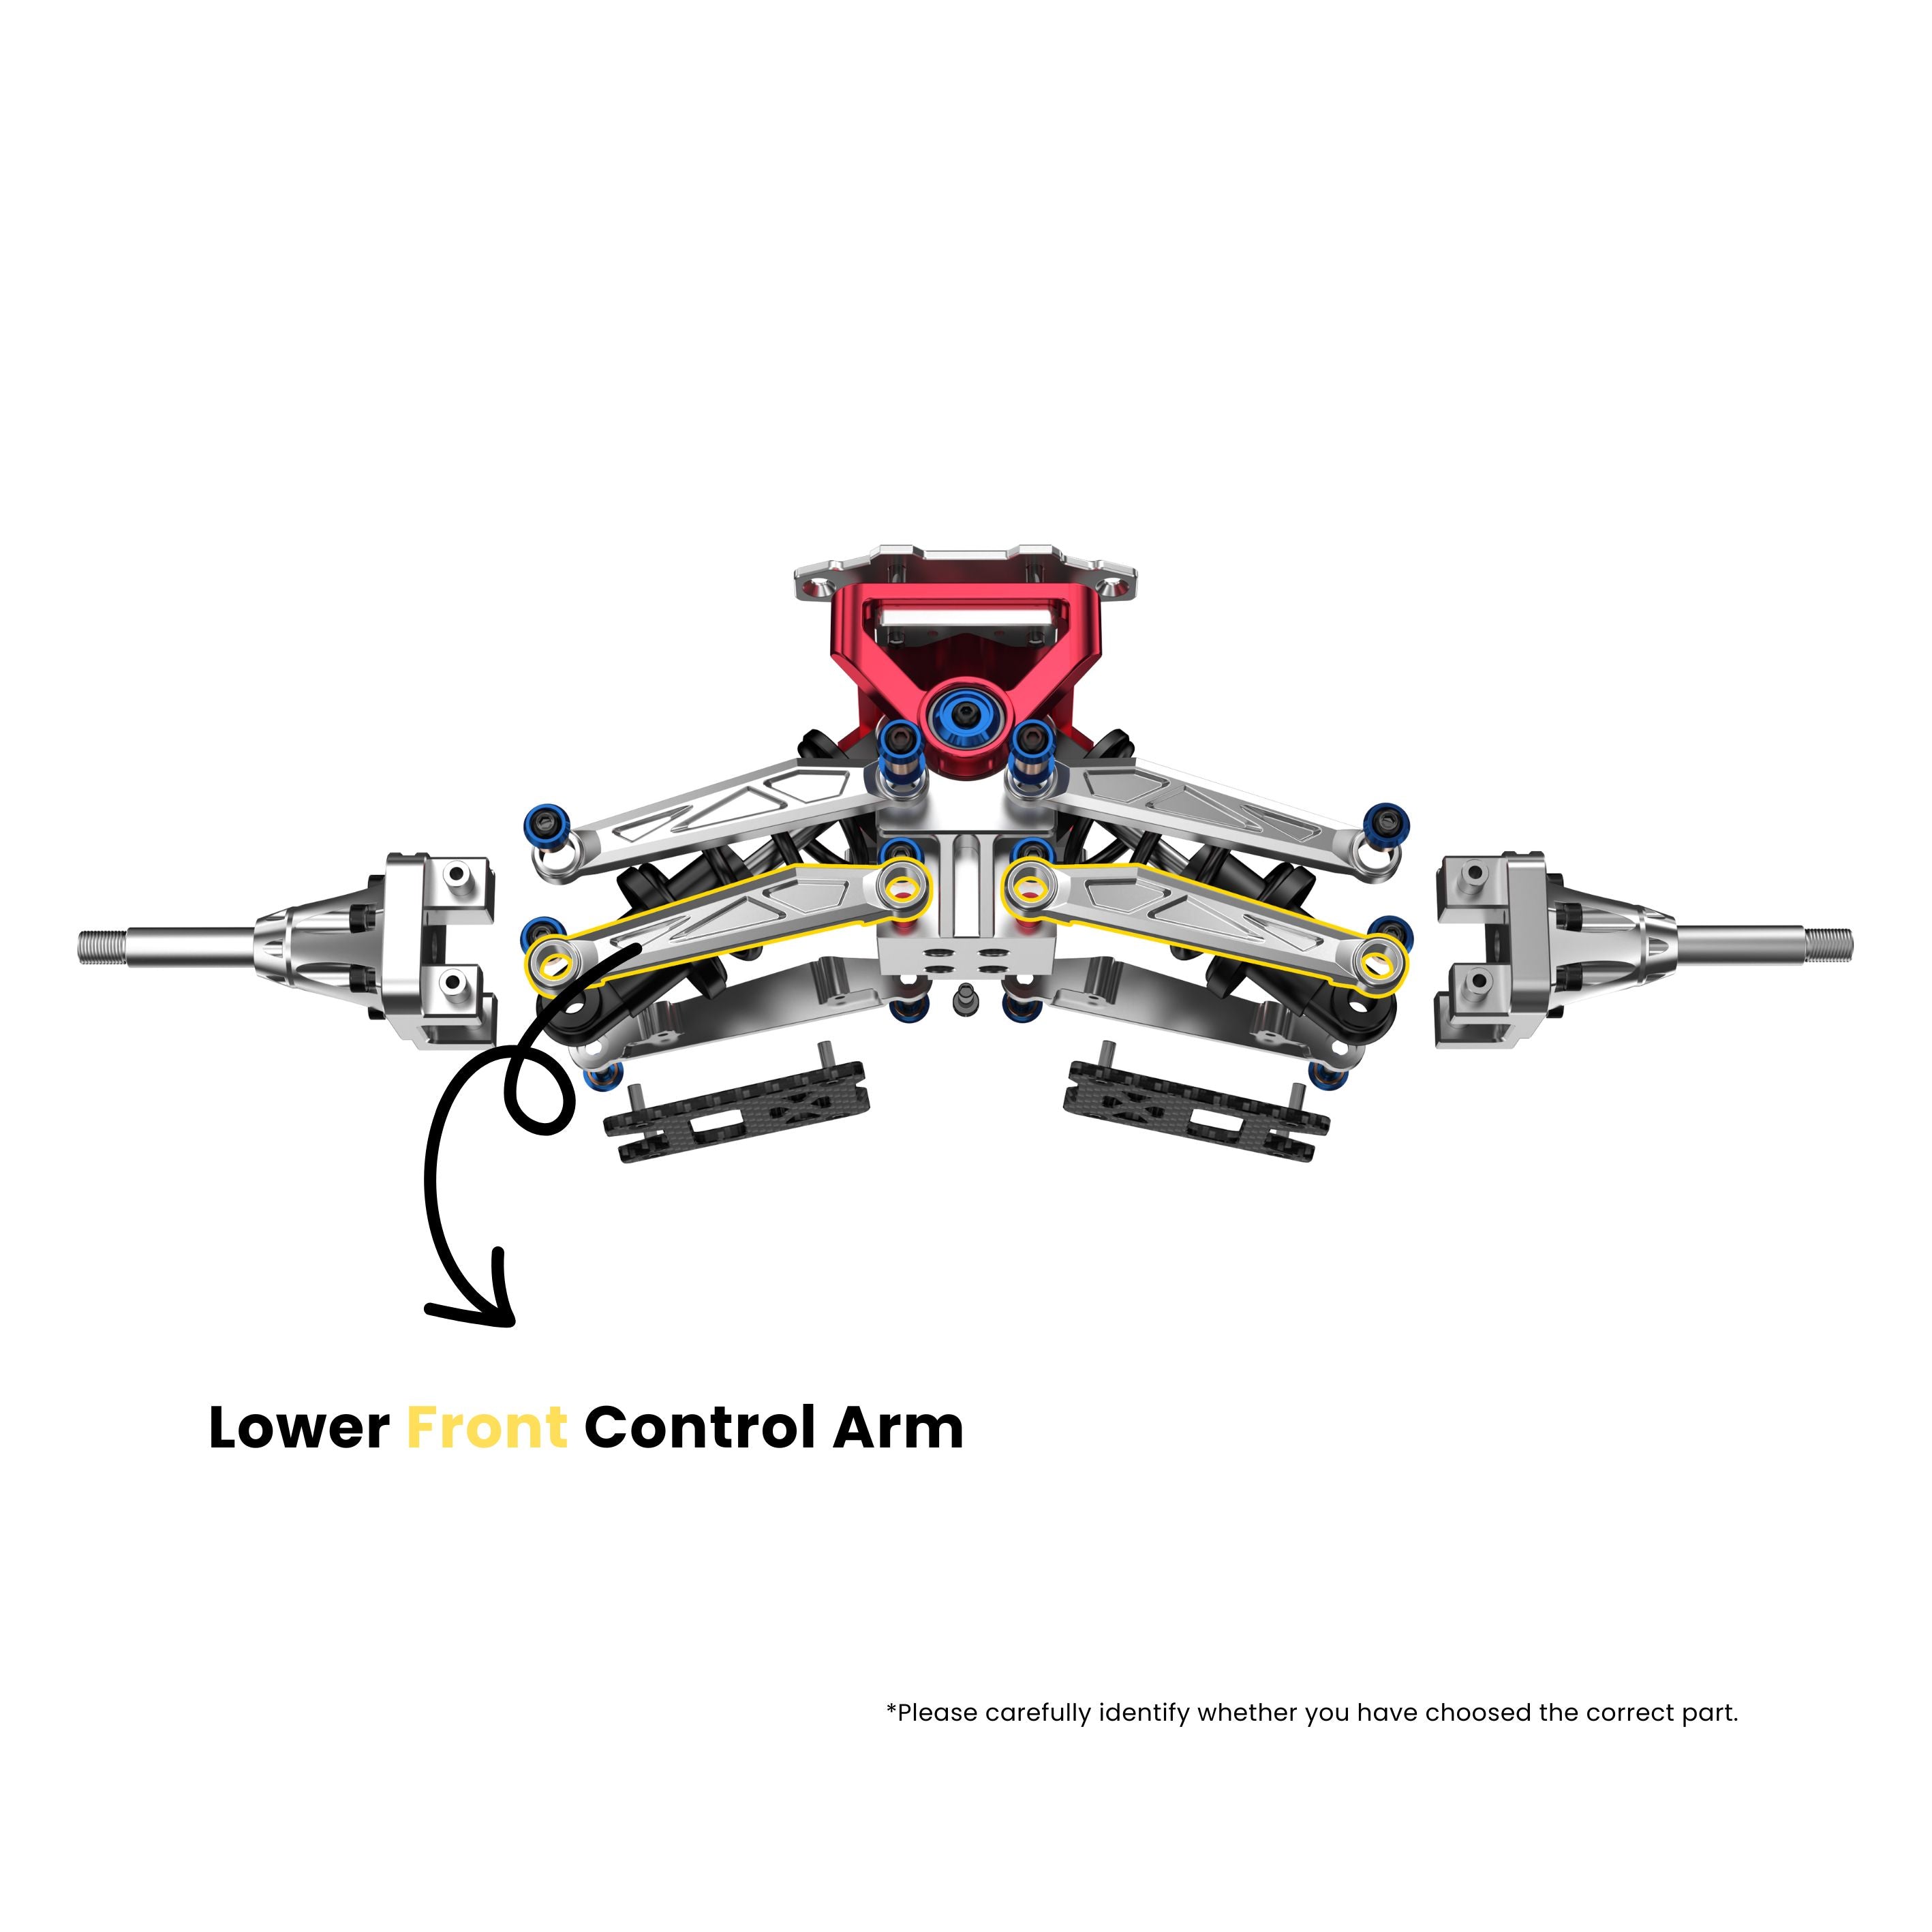 Acedeck® CNC Truck Control Arm | Nyx Z3